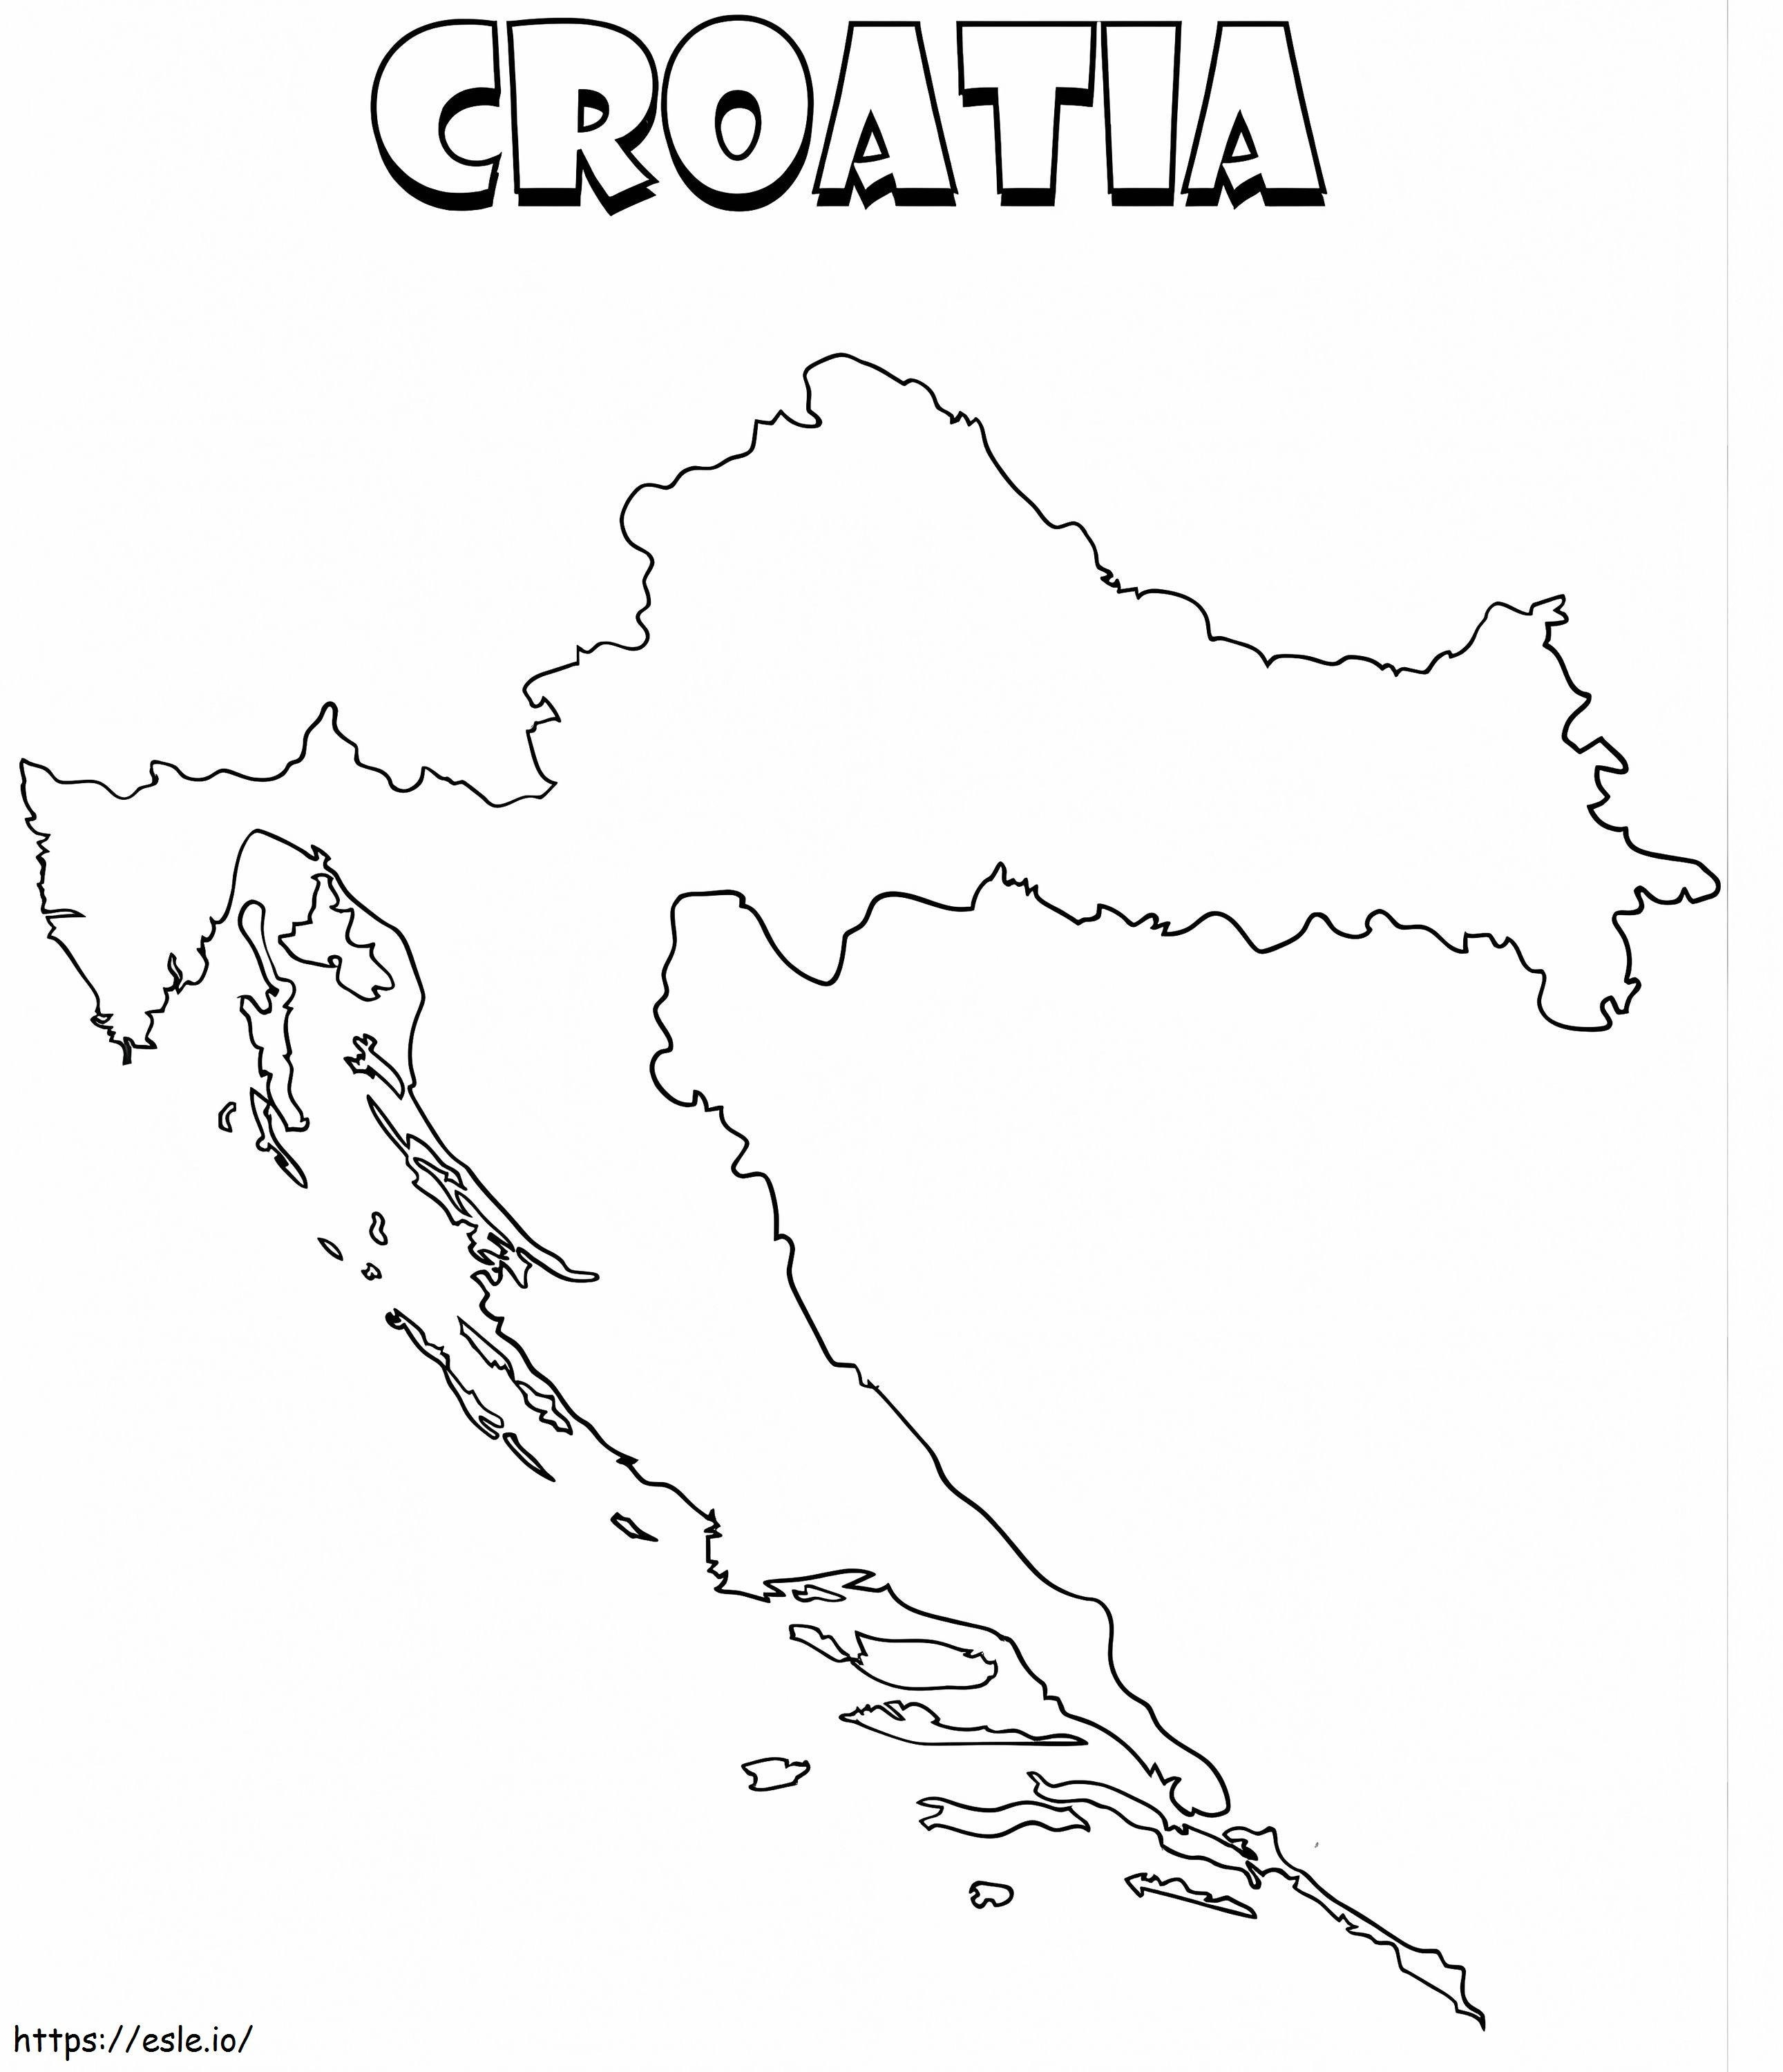 Croatias Map coloring page